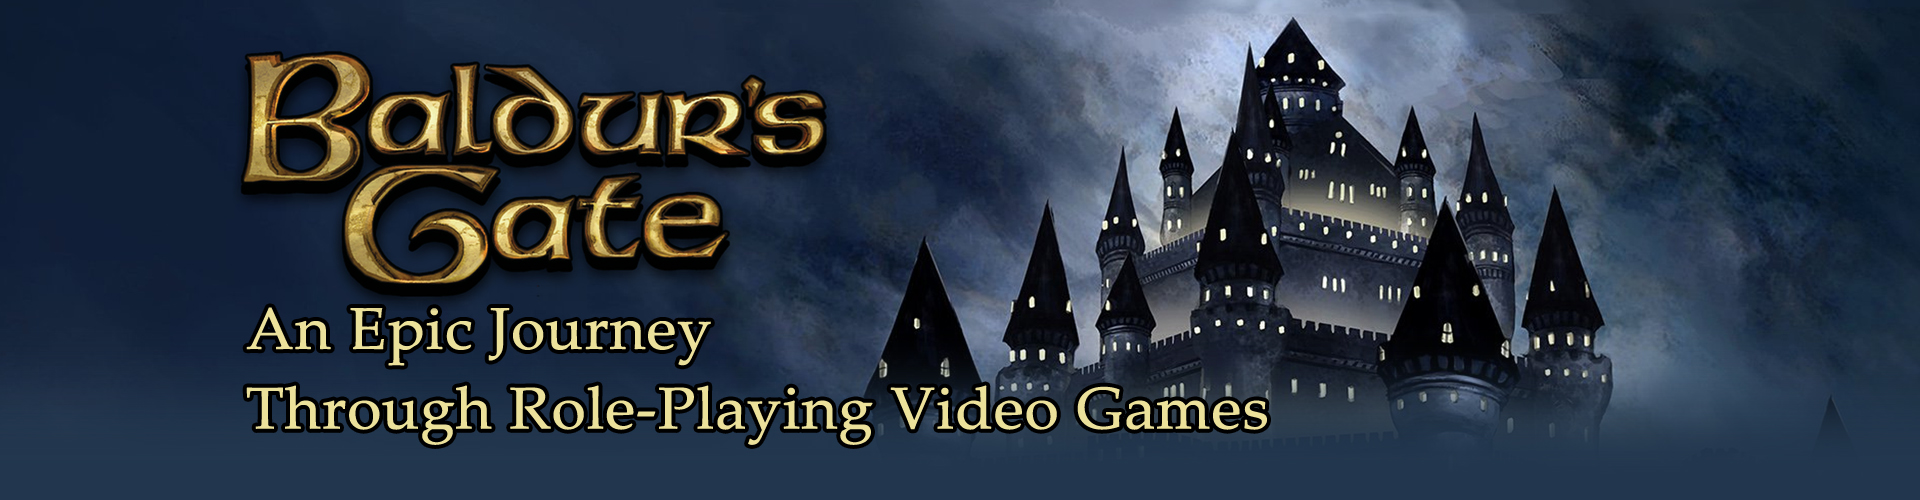 Juegos Baldur's Gate: La serie de RPG Dungeons & Dragons